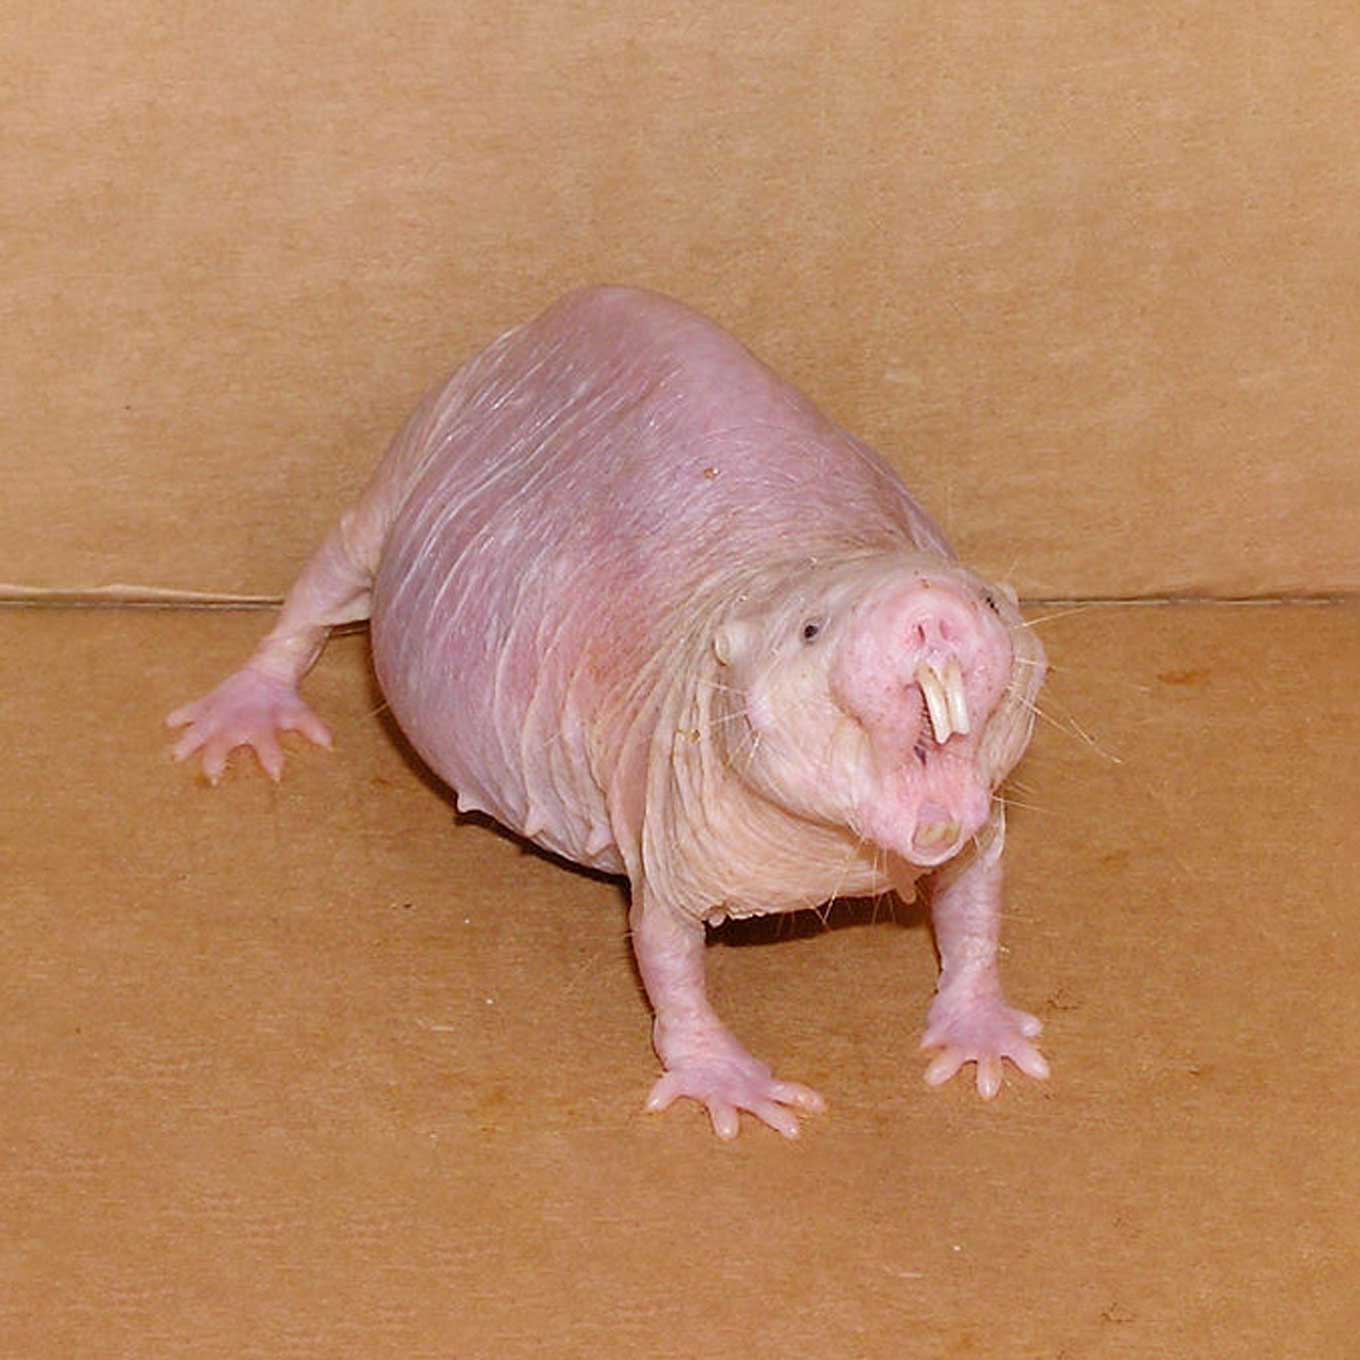 Naked Mole Rat showing its teeth